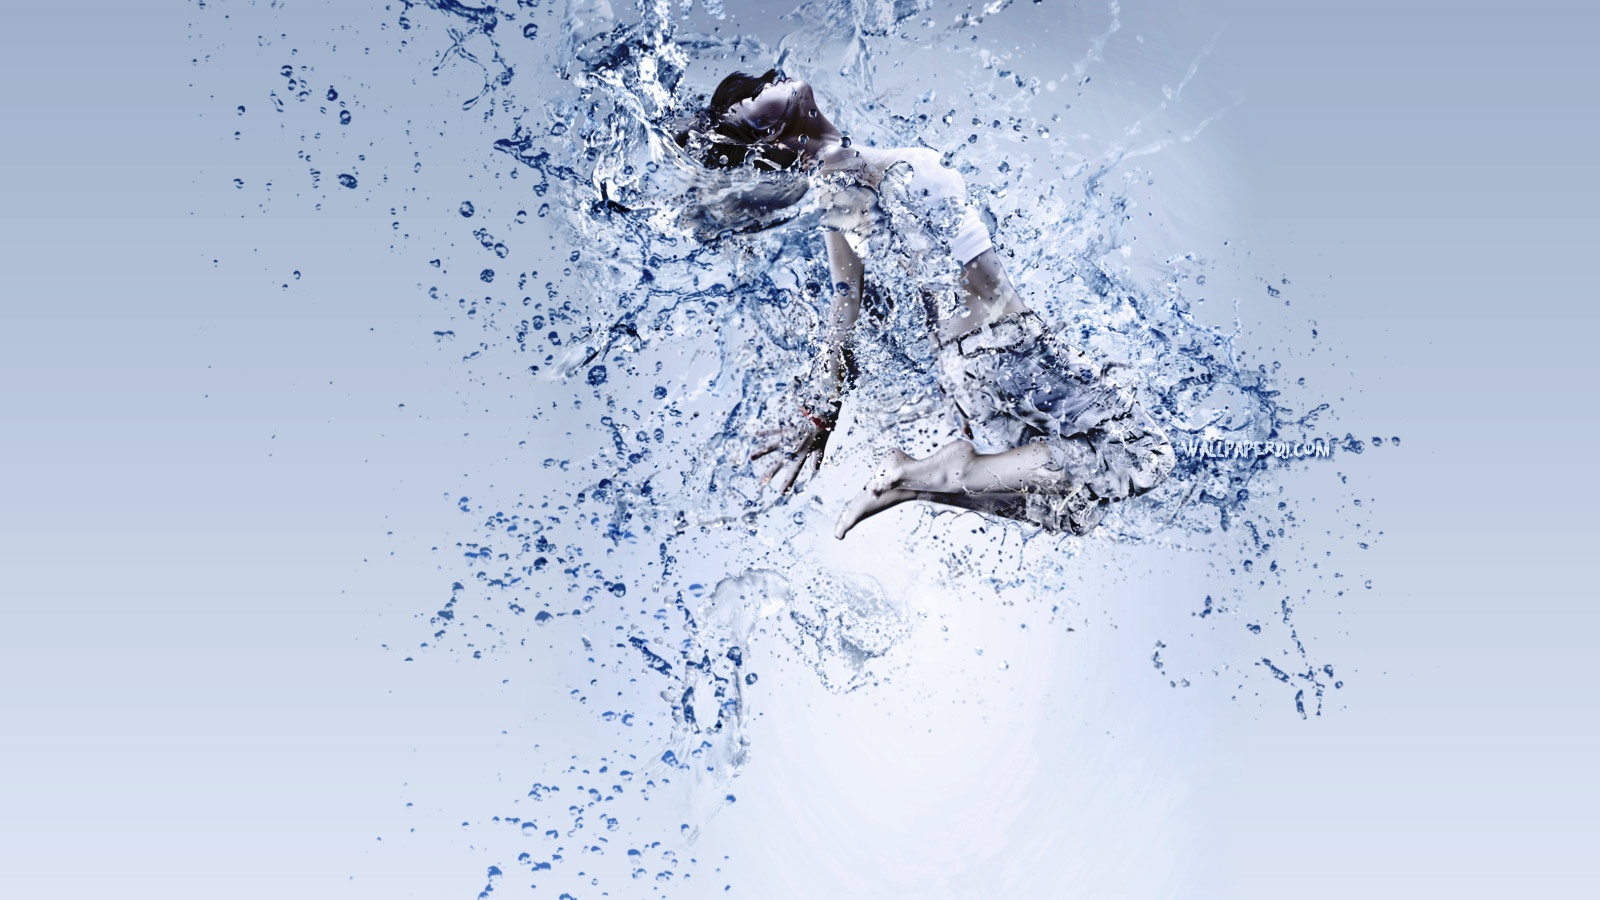 Ultrascyence dirty water splash hiphop image